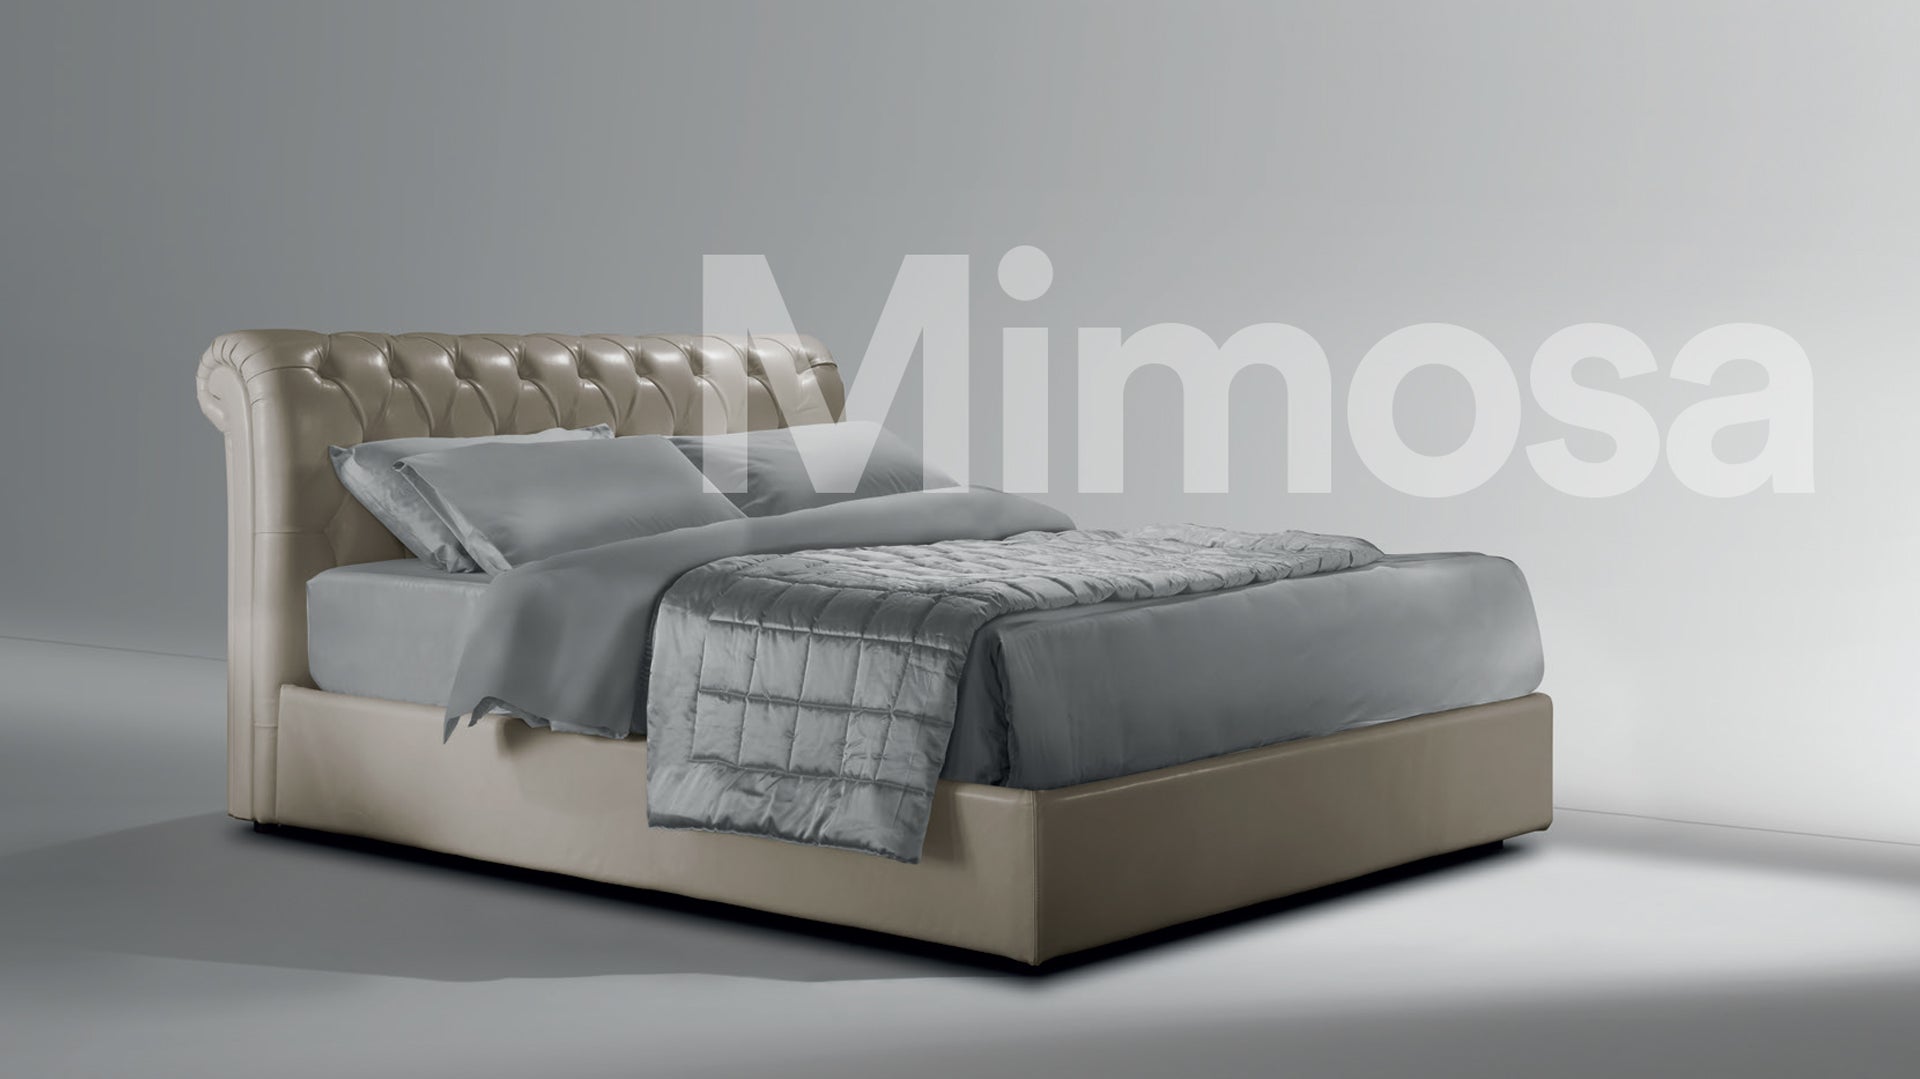 Dorelan's Mimosa mattress in a luxurious bedroom